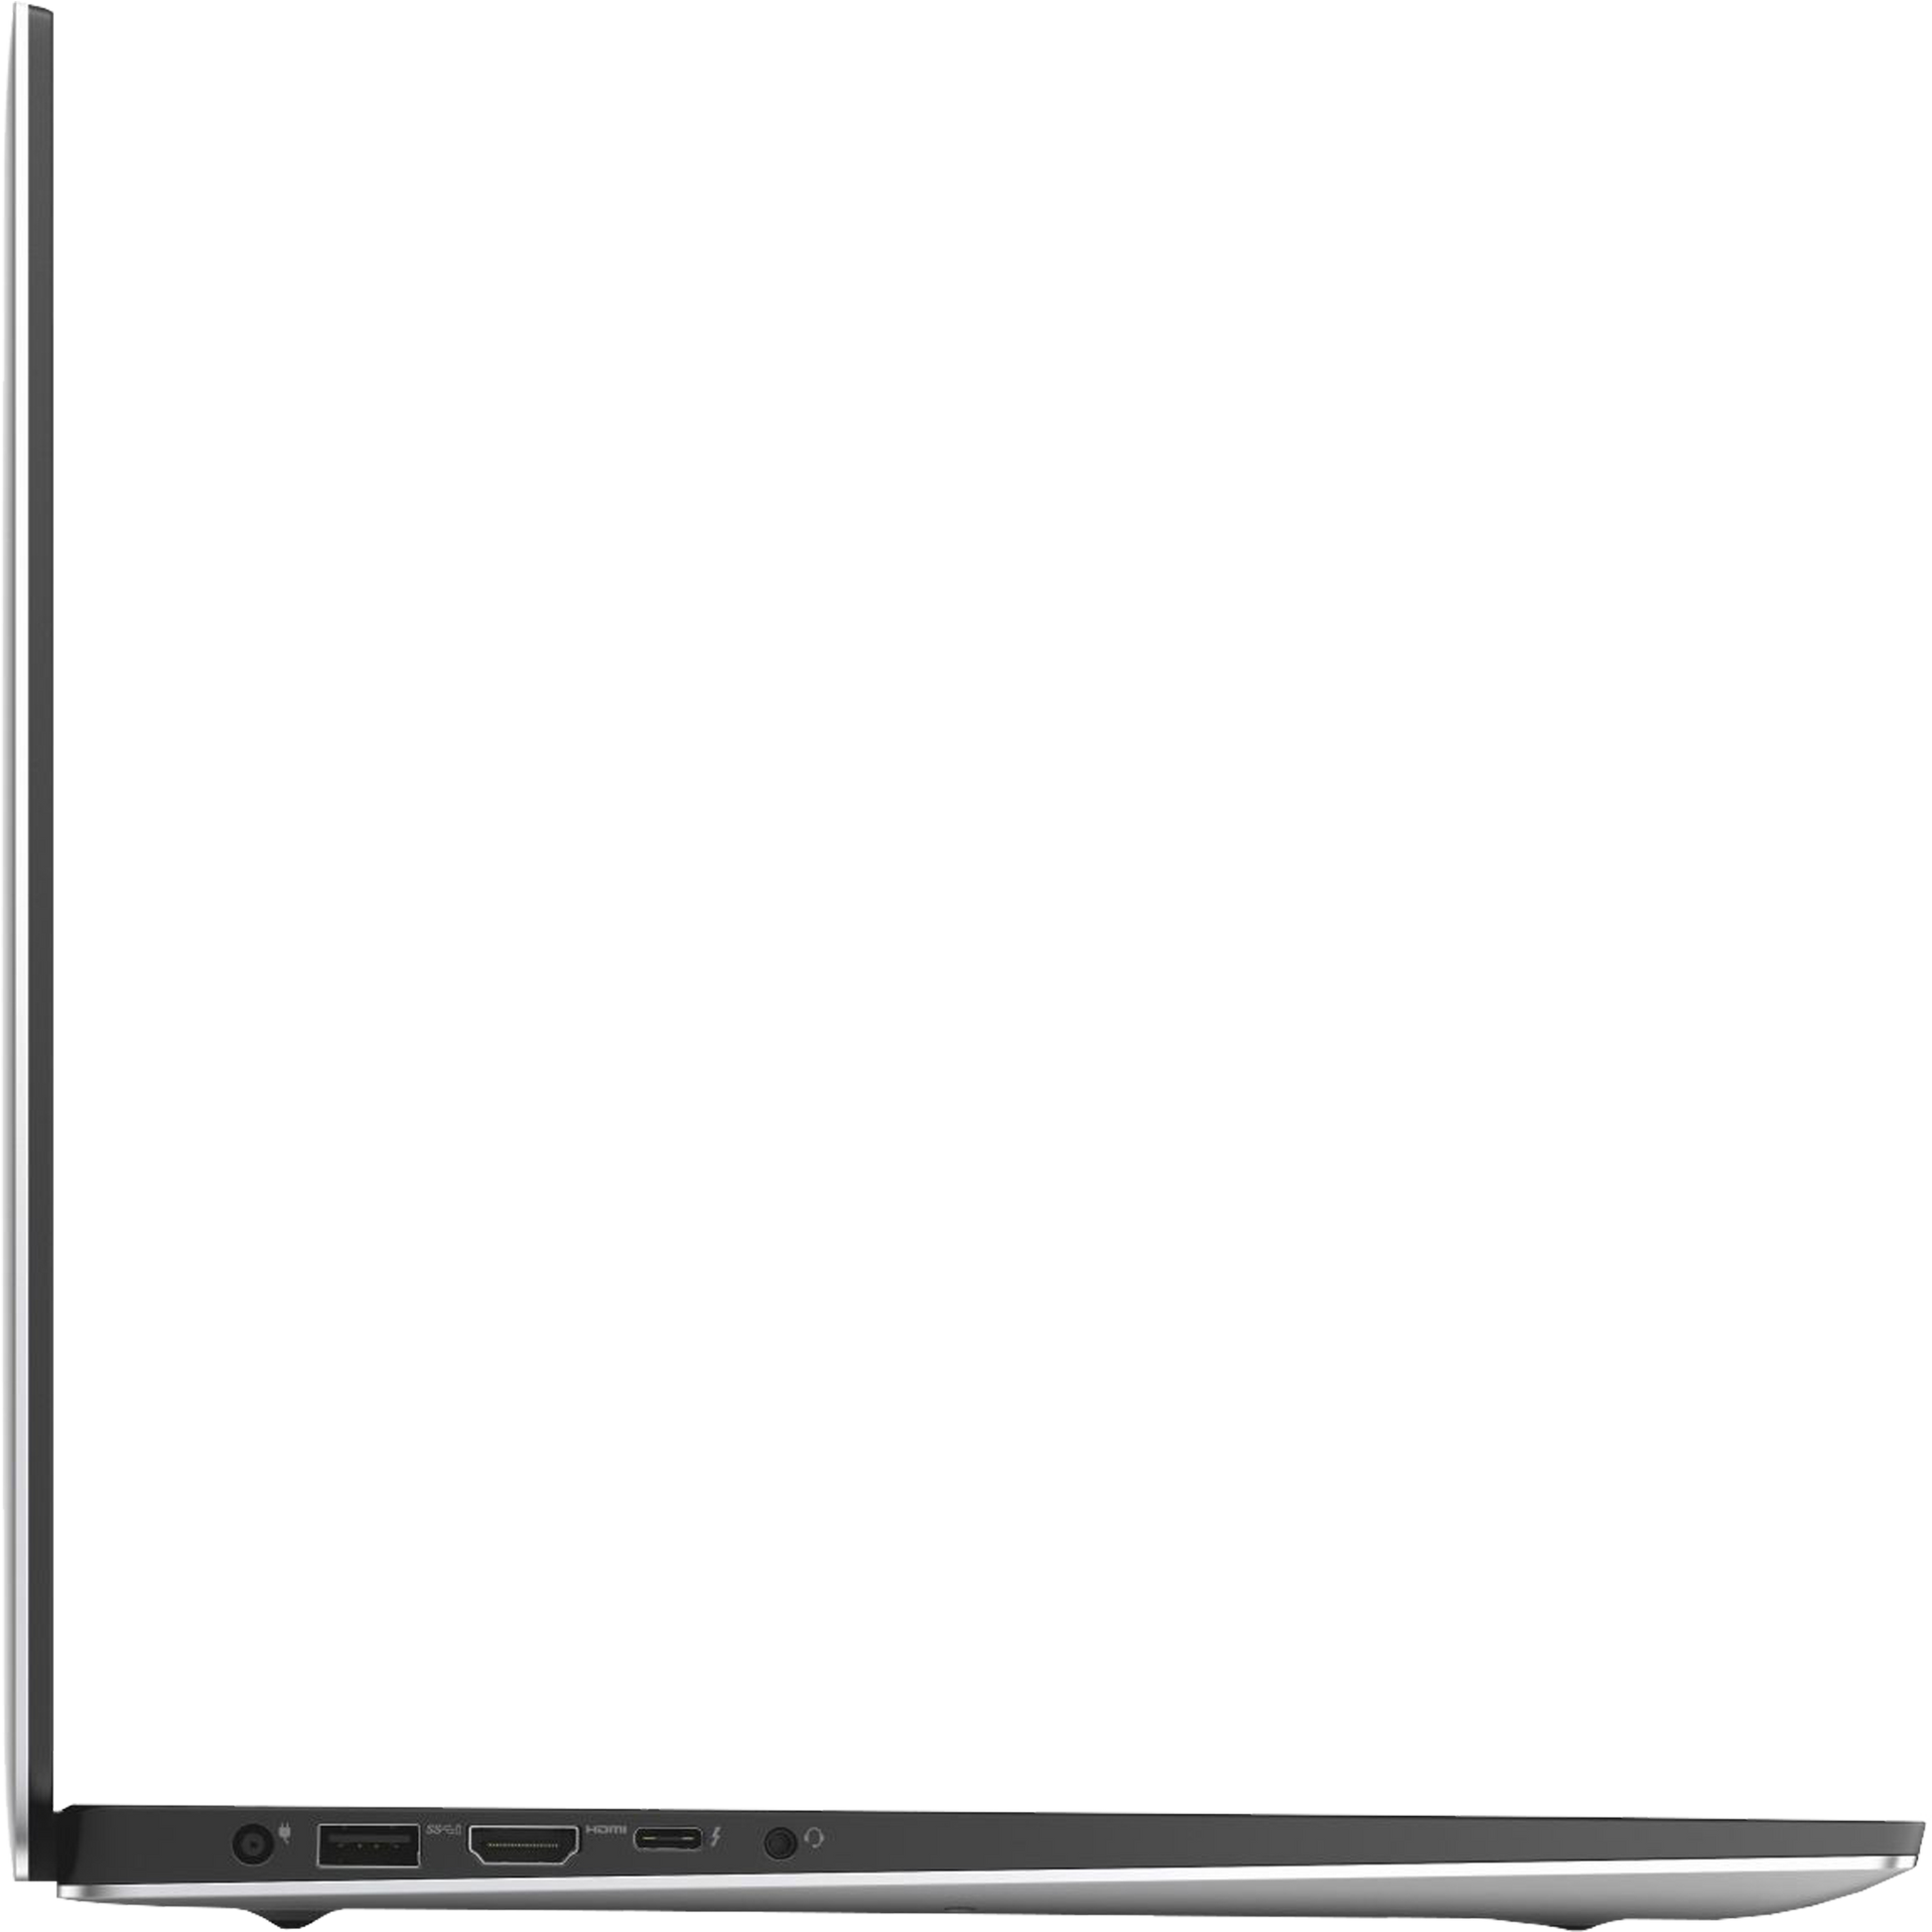 Dell Precision 5530 Intel i7, 8th Gen Mobile Workstation Laptop - Win 11 Pro Laptops - Refurbished